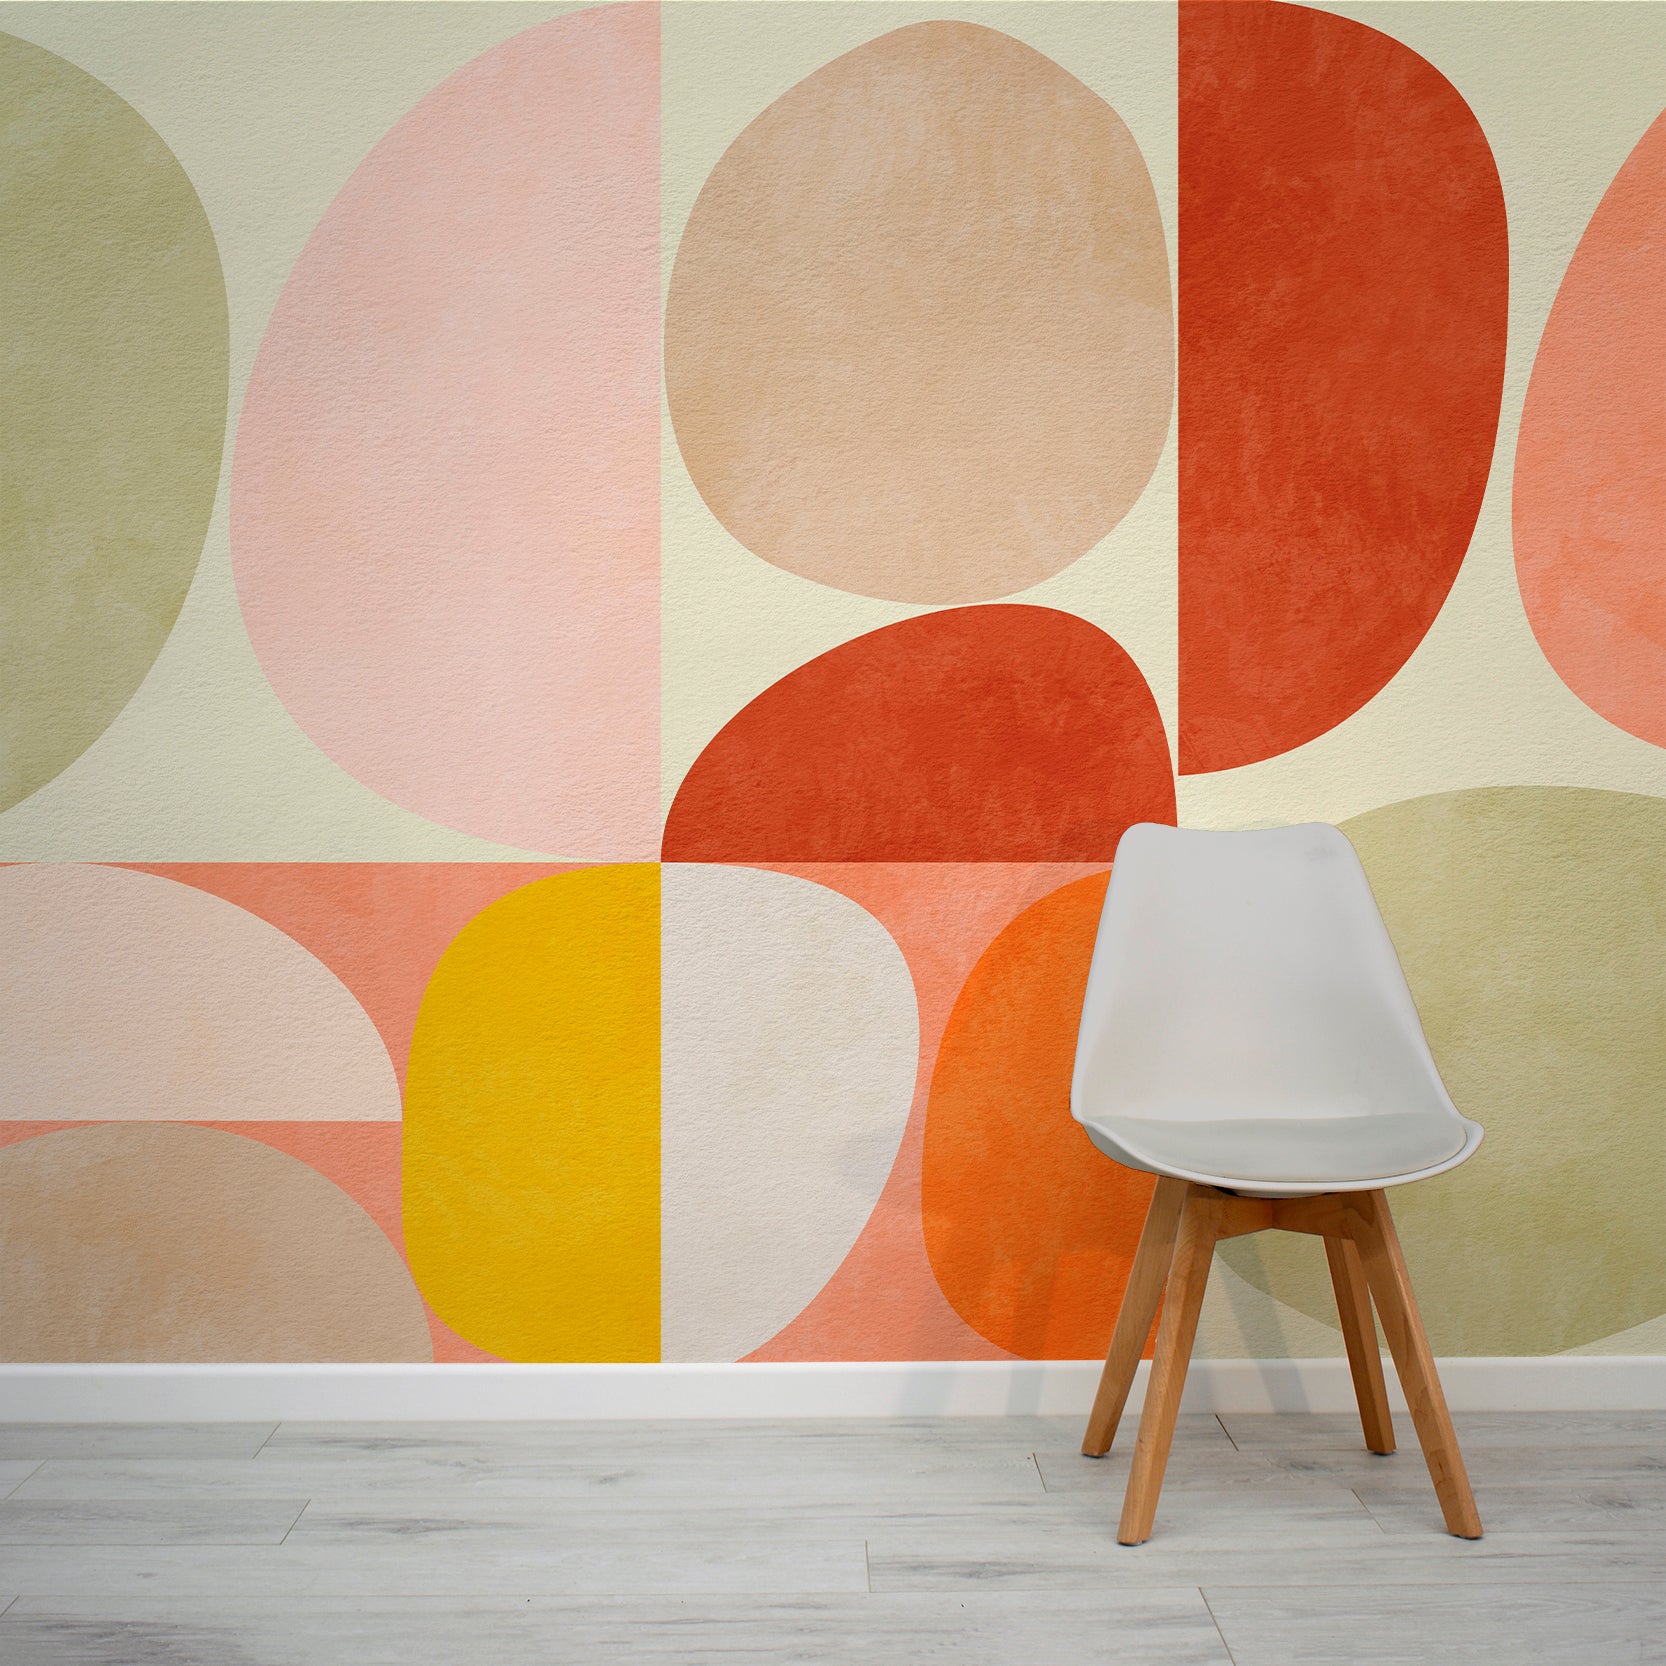 Moreel inval Eindeloos Modernistic Bauhaus Abstract Wallpaper Mural | WallpaperMural.com